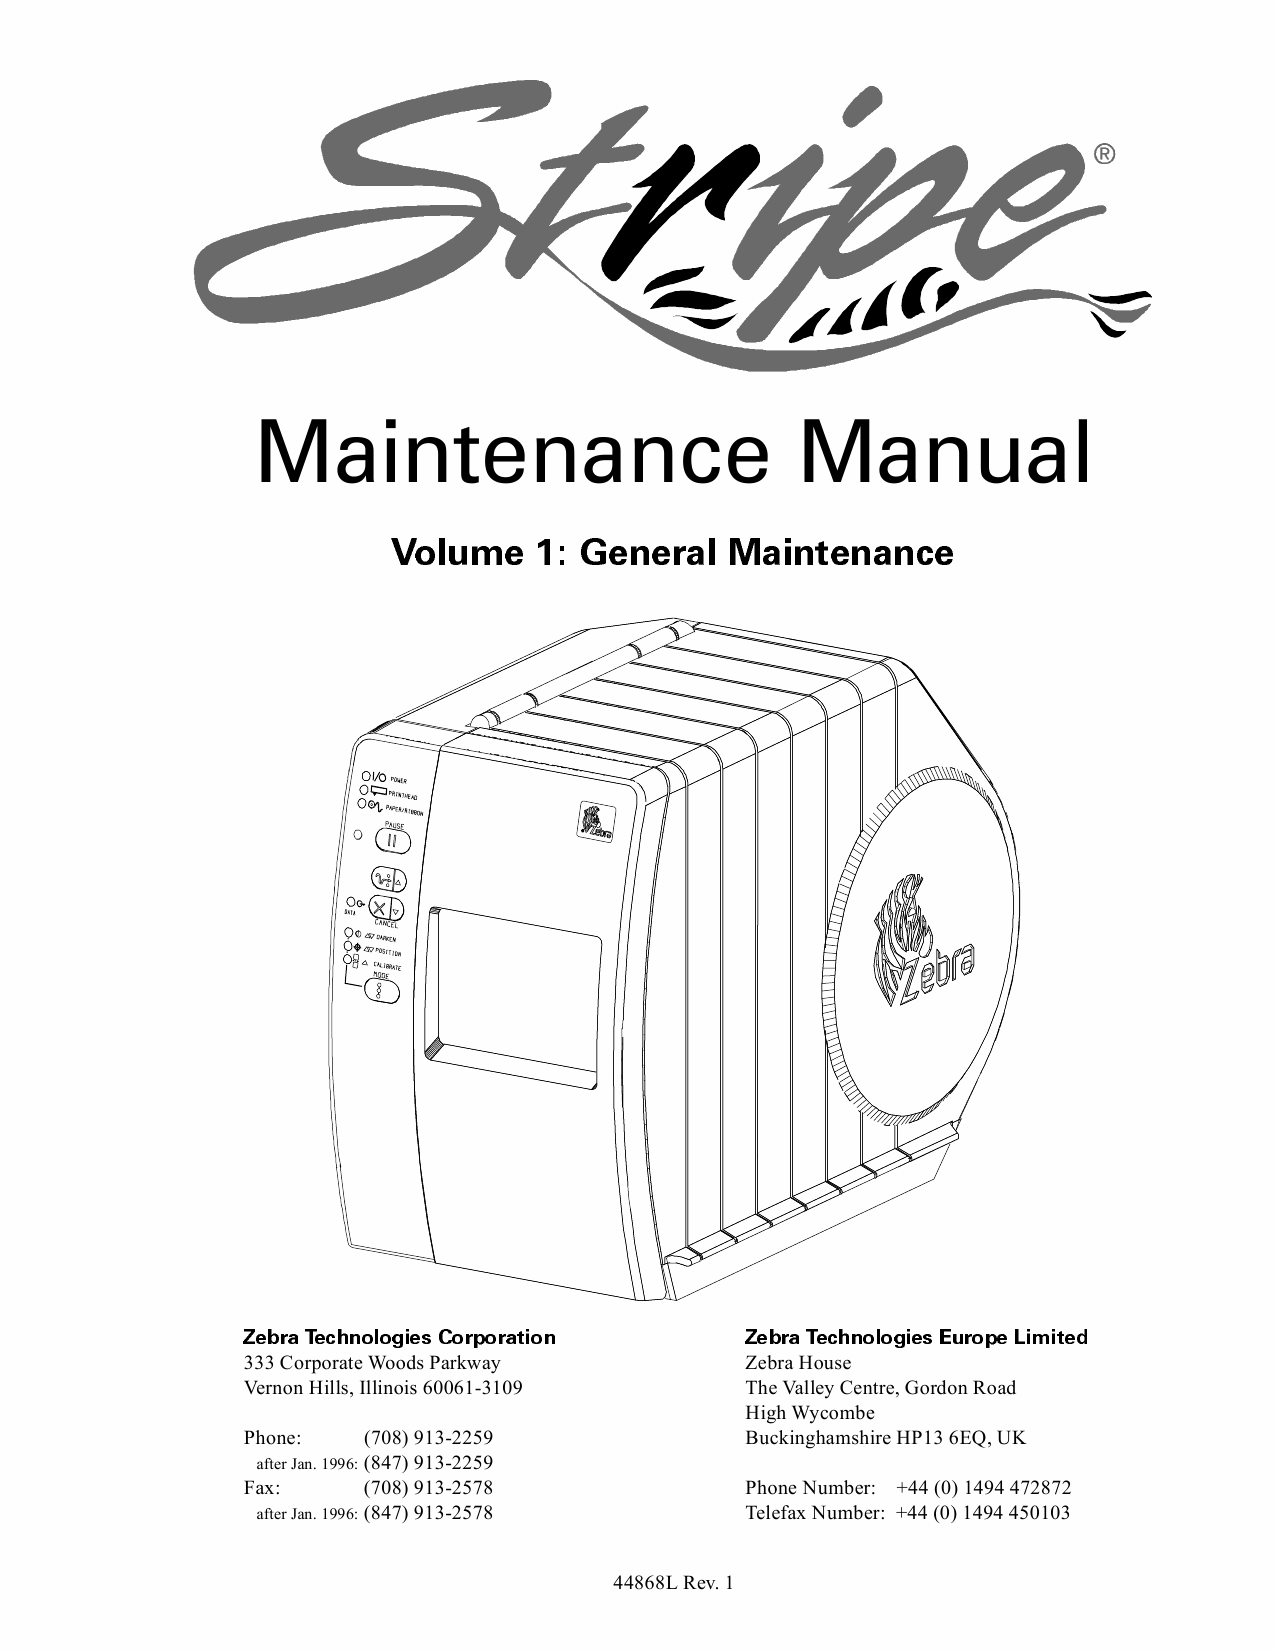 Zebra Label S300 S500 Maintenance Service Manual-1